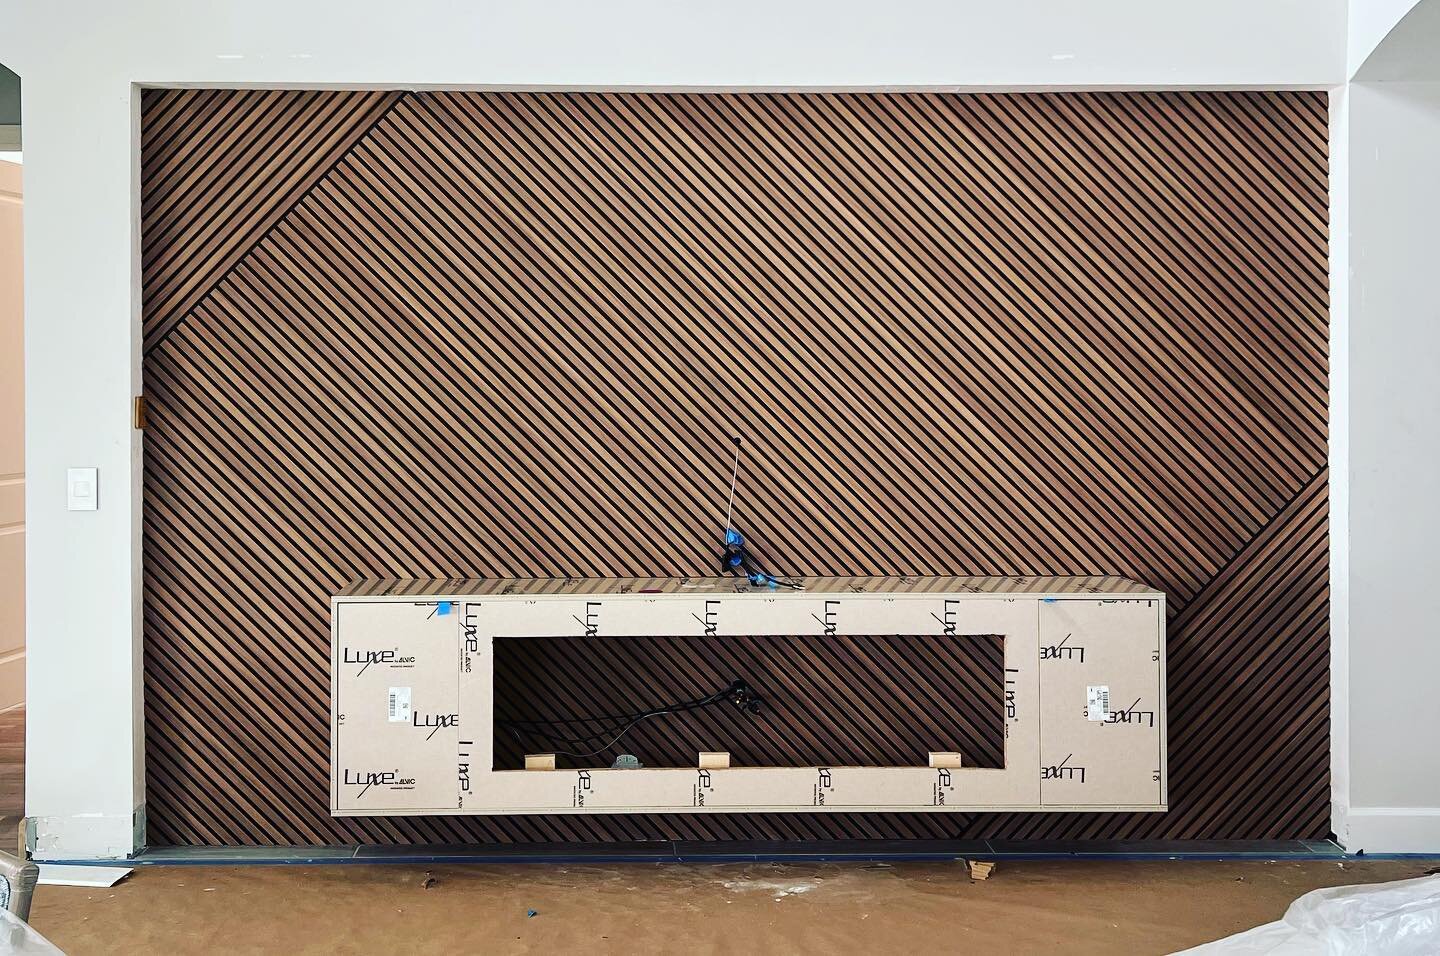 TV wall coming along nicely! @lioherusa @plywoodexpress_official #interiordesign #southfloridadesign #slatwall